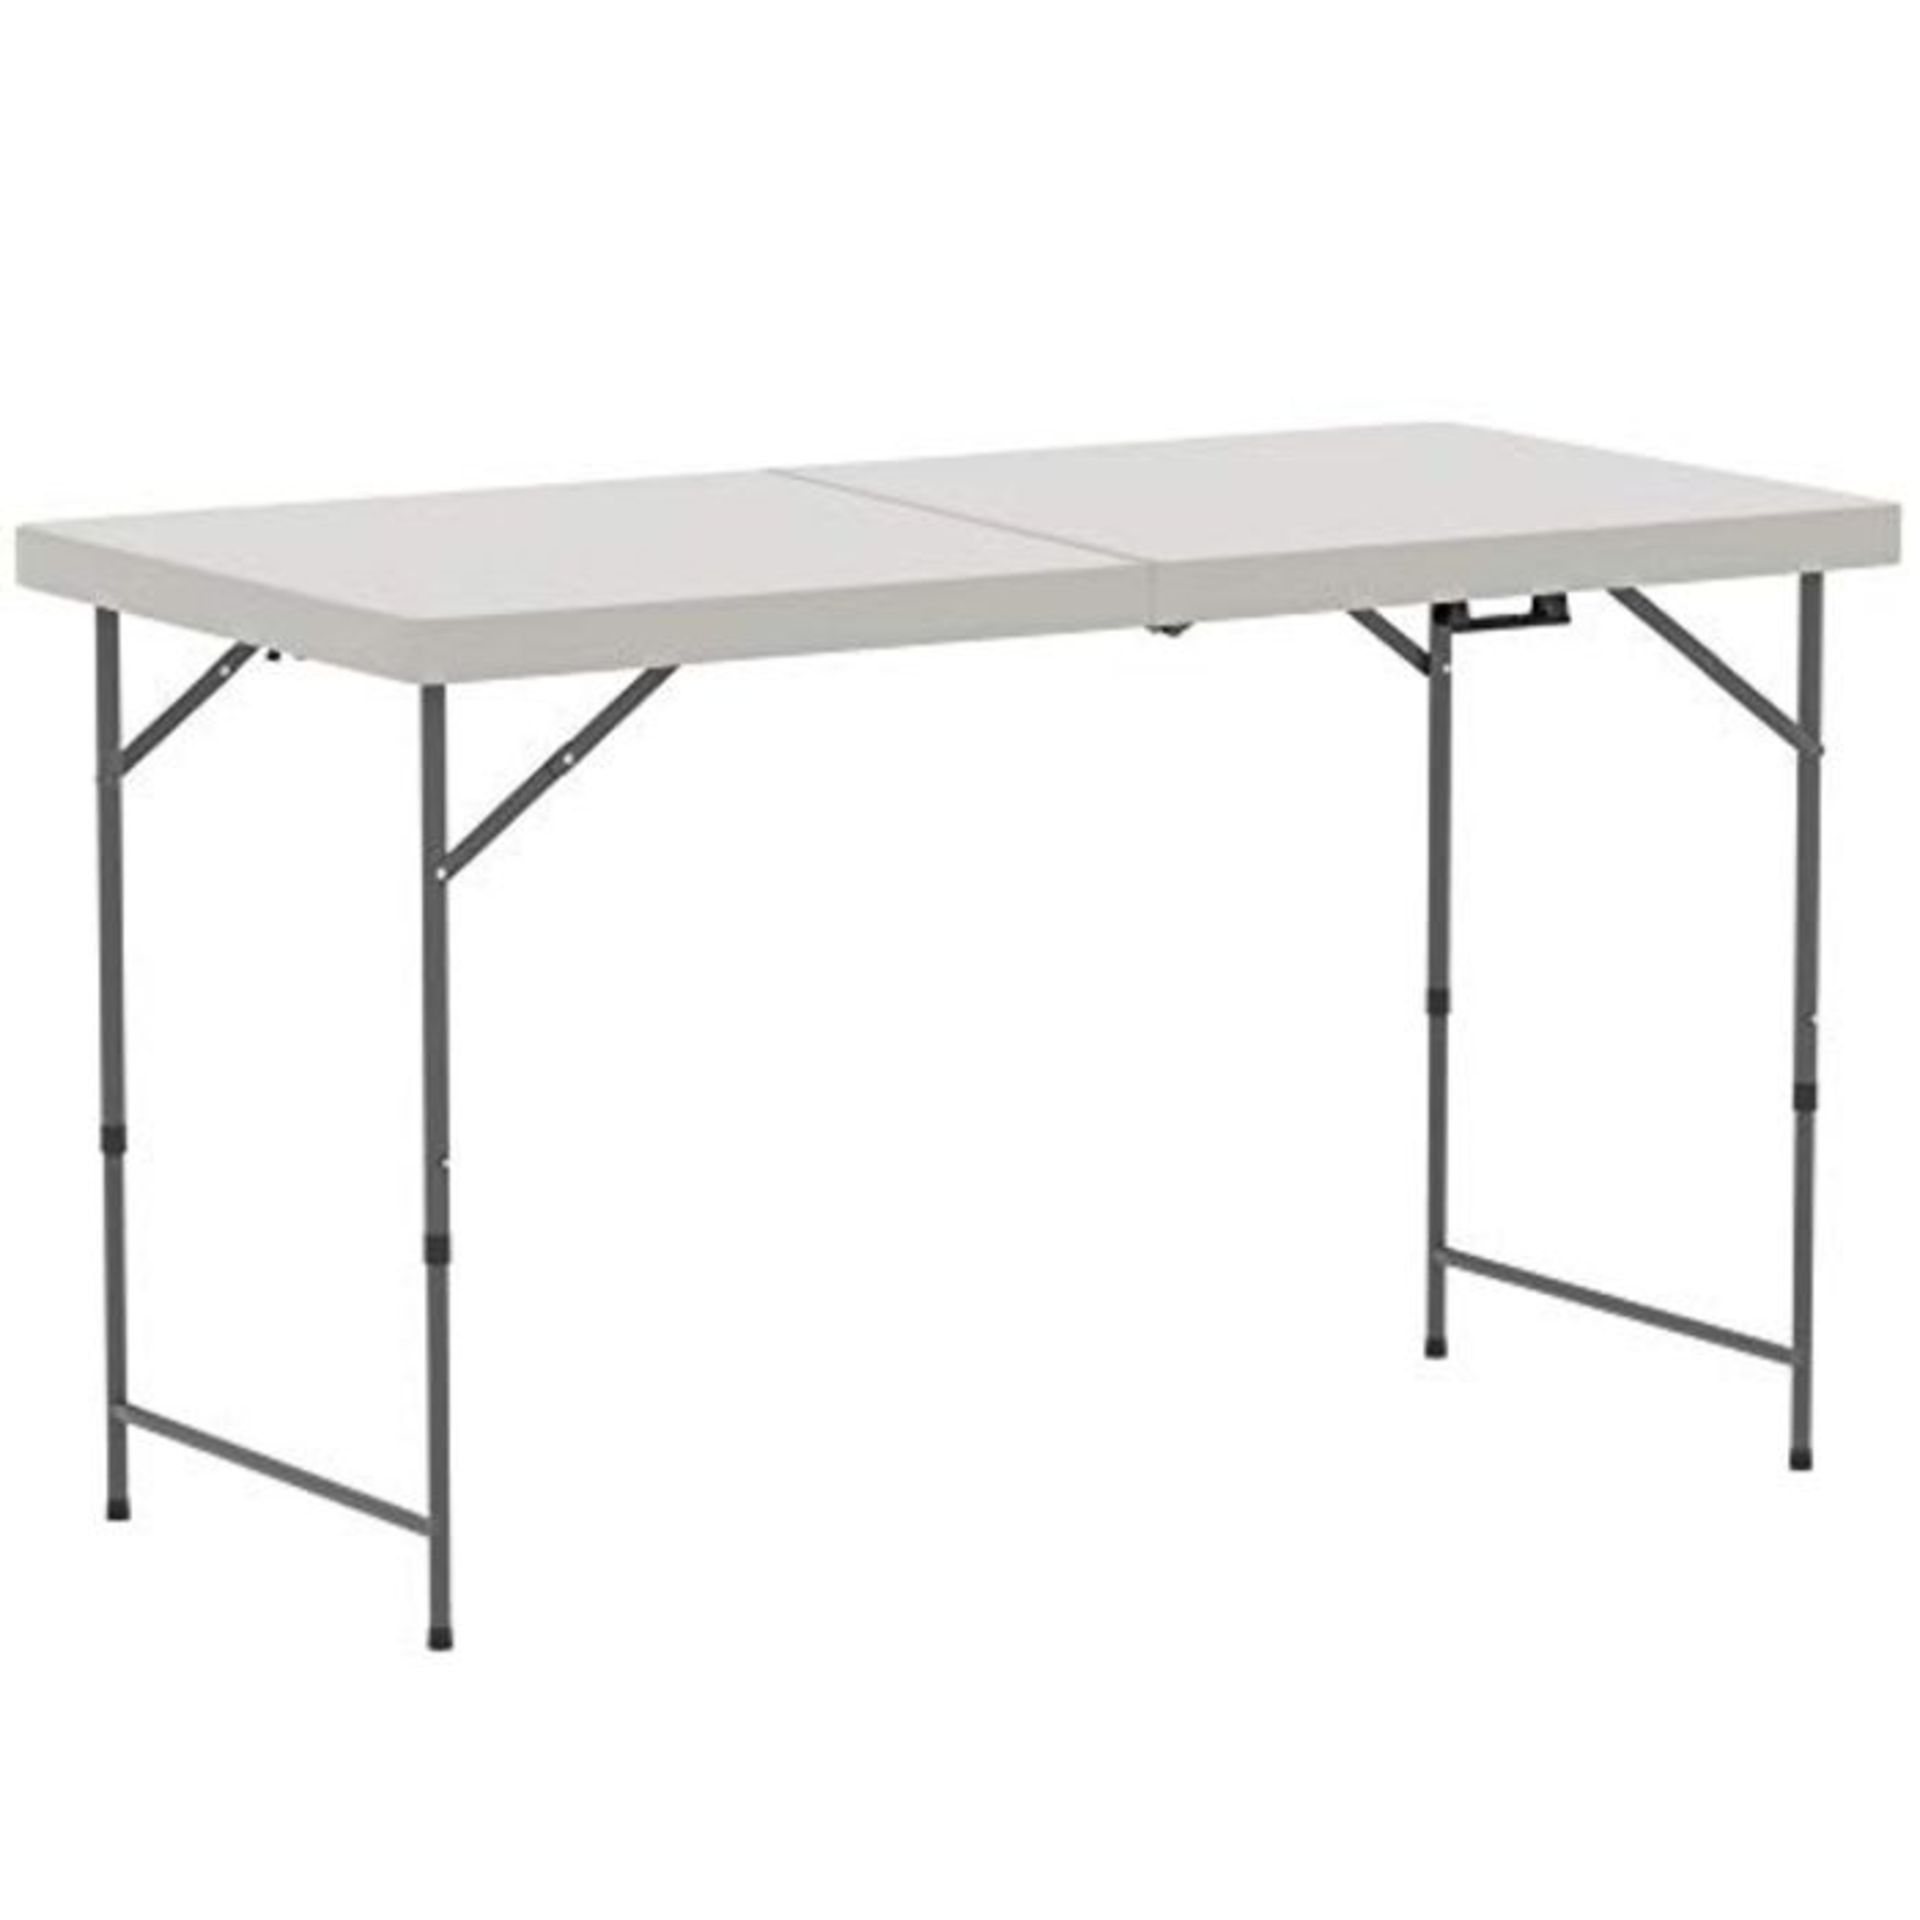 Amazon Basics Heavy Duty Trestle Picnic Folding Table Silver, 4 feet